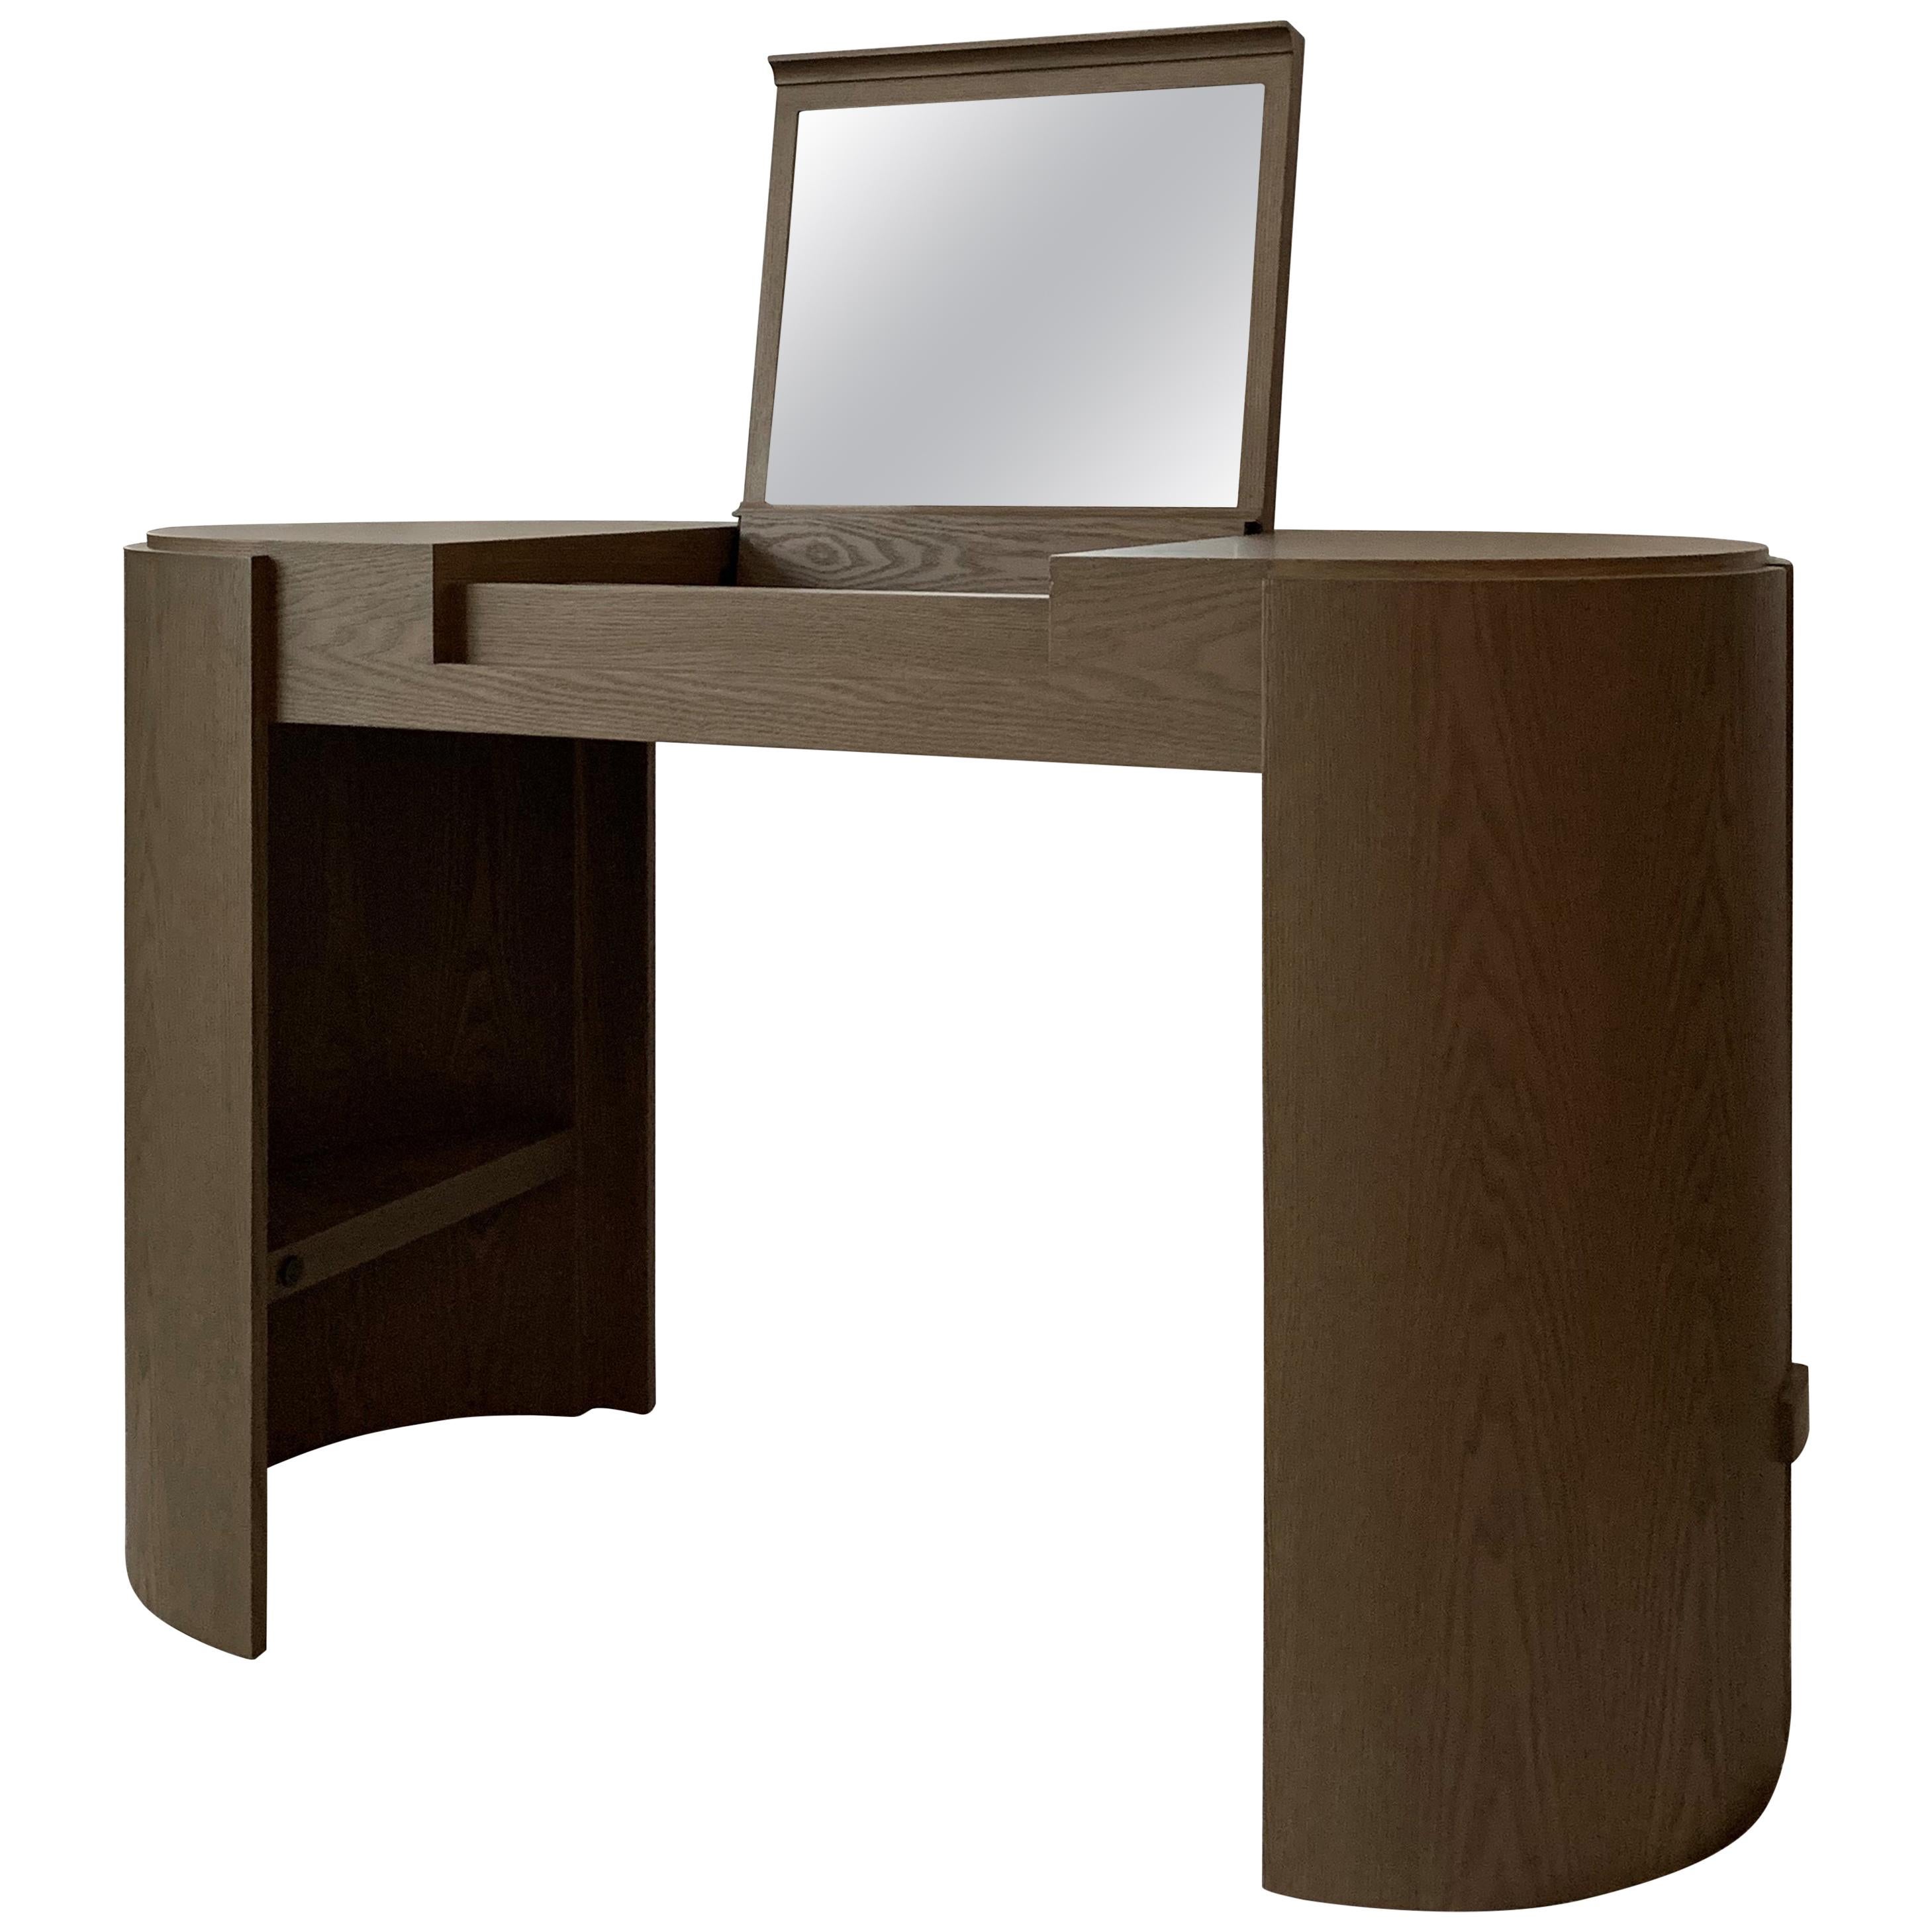 Wooden Dressing Table Interlock André Fu Living Home Oak New Mirror Desk